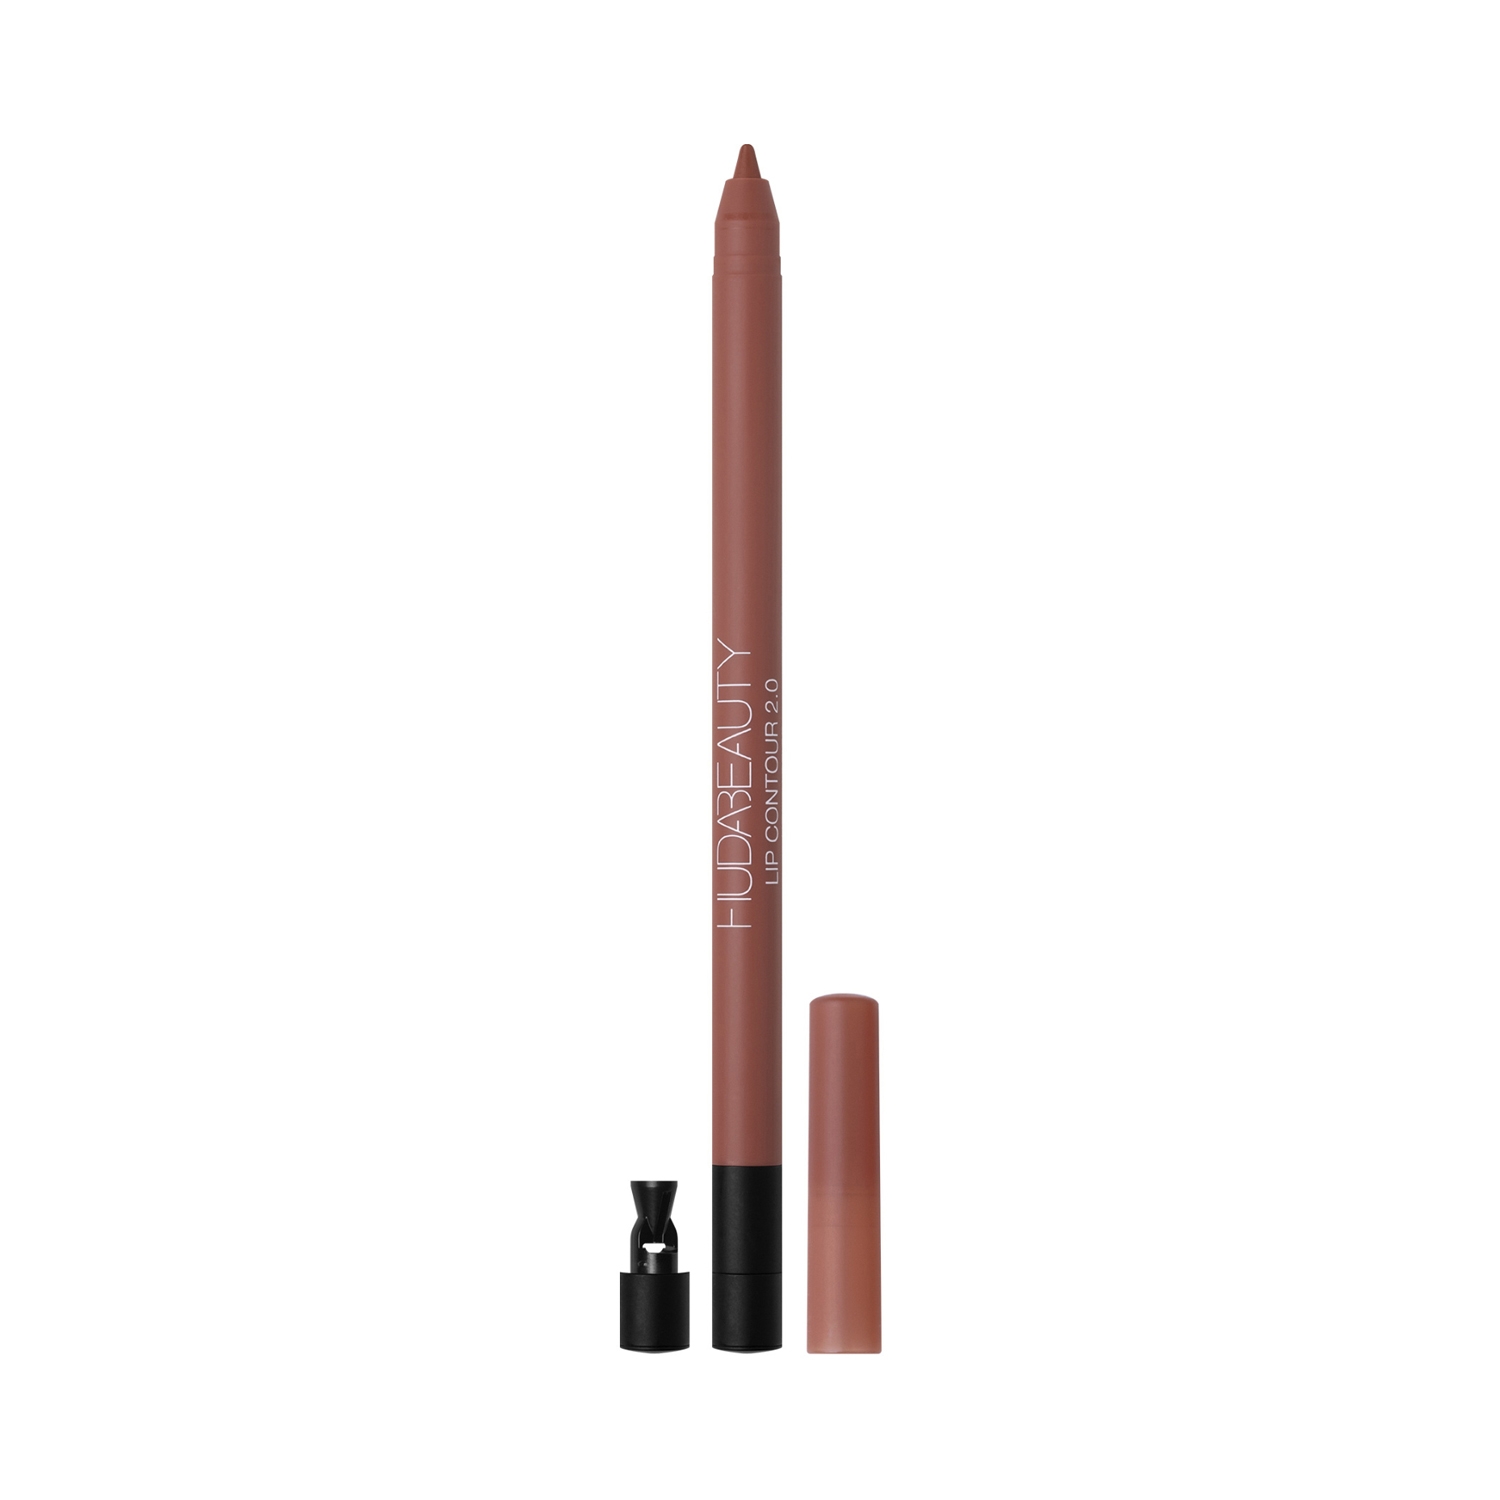 Huda Beauty | Huda Beauty Lip Contour 2.0 Automatic Matte Lip Pencil - Warm Brown (0.5g)